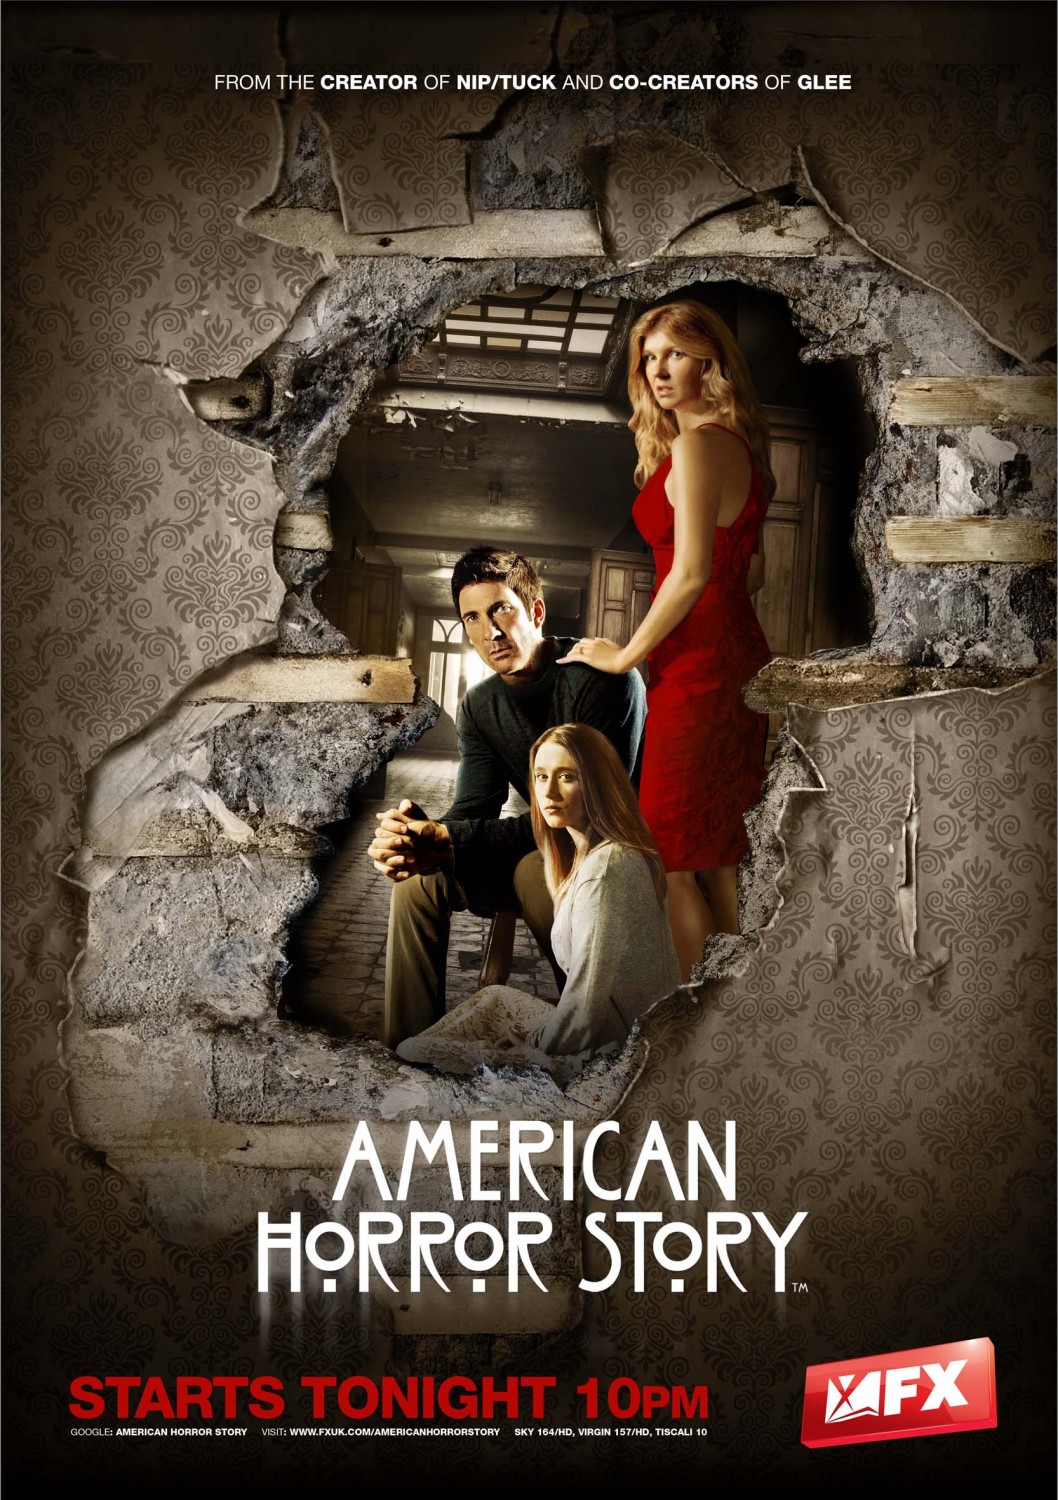 American-Horror-Story-Season-1-UK-Promotional-Poster-american-horror-story-26649185-1058-1500.jpg